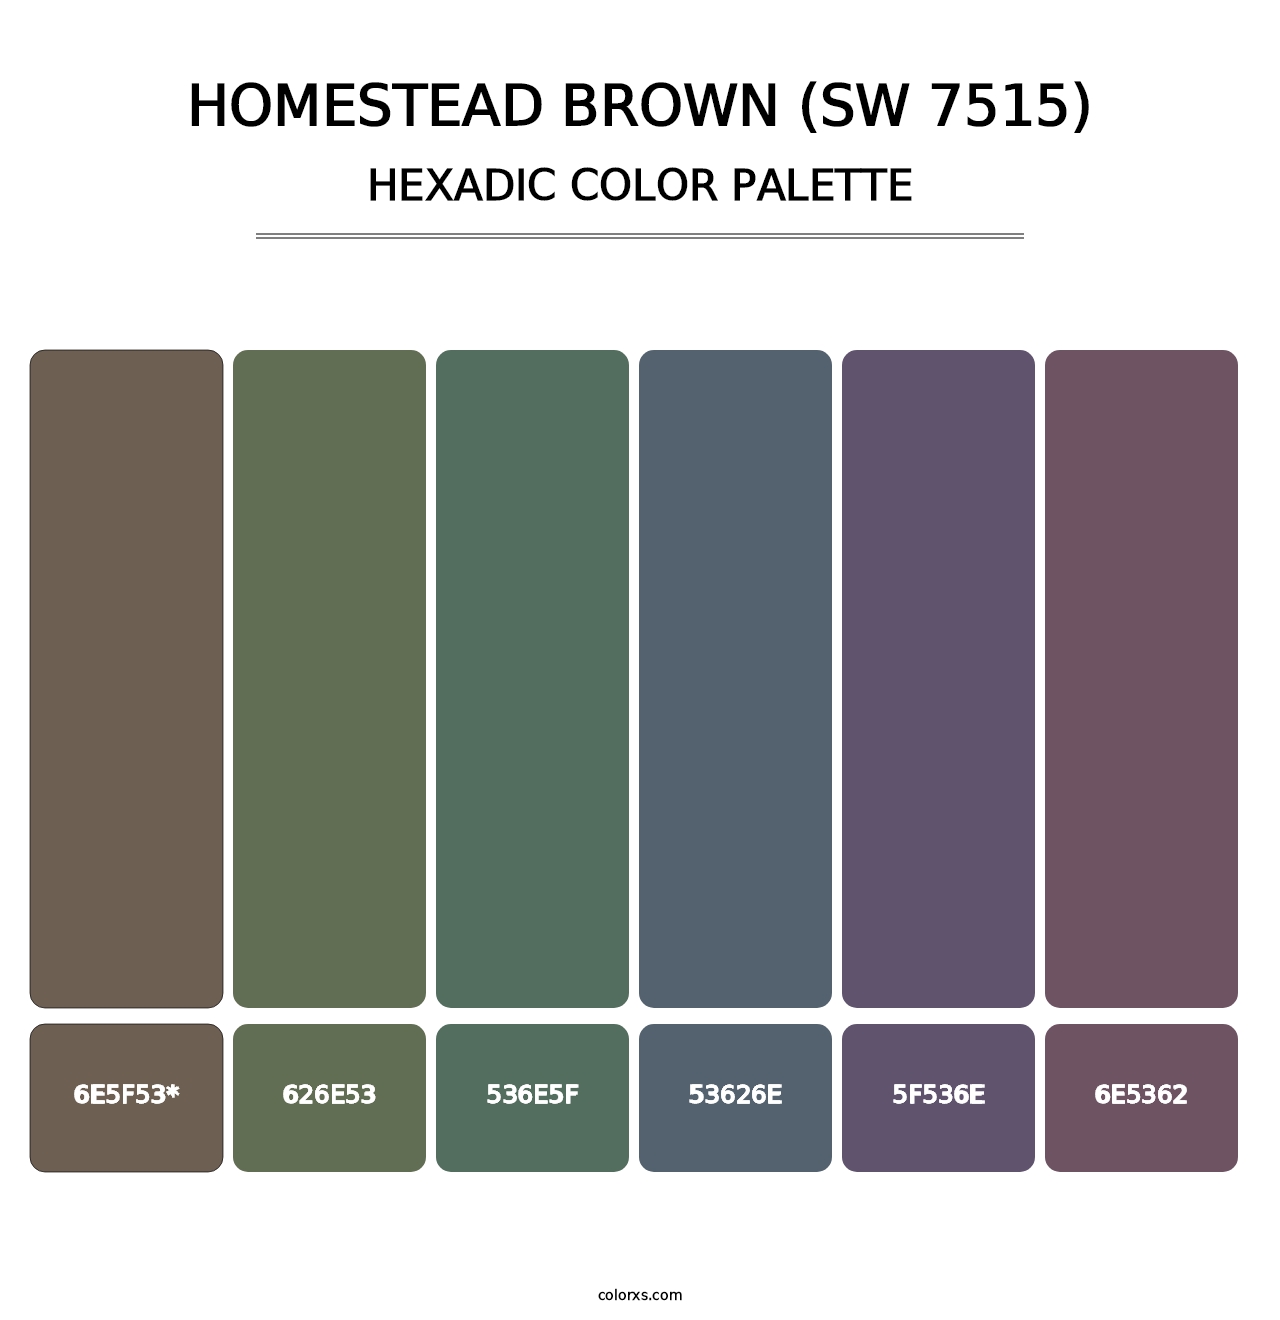 Homestead Brown (SW 7515) - Hexadic Color Palette